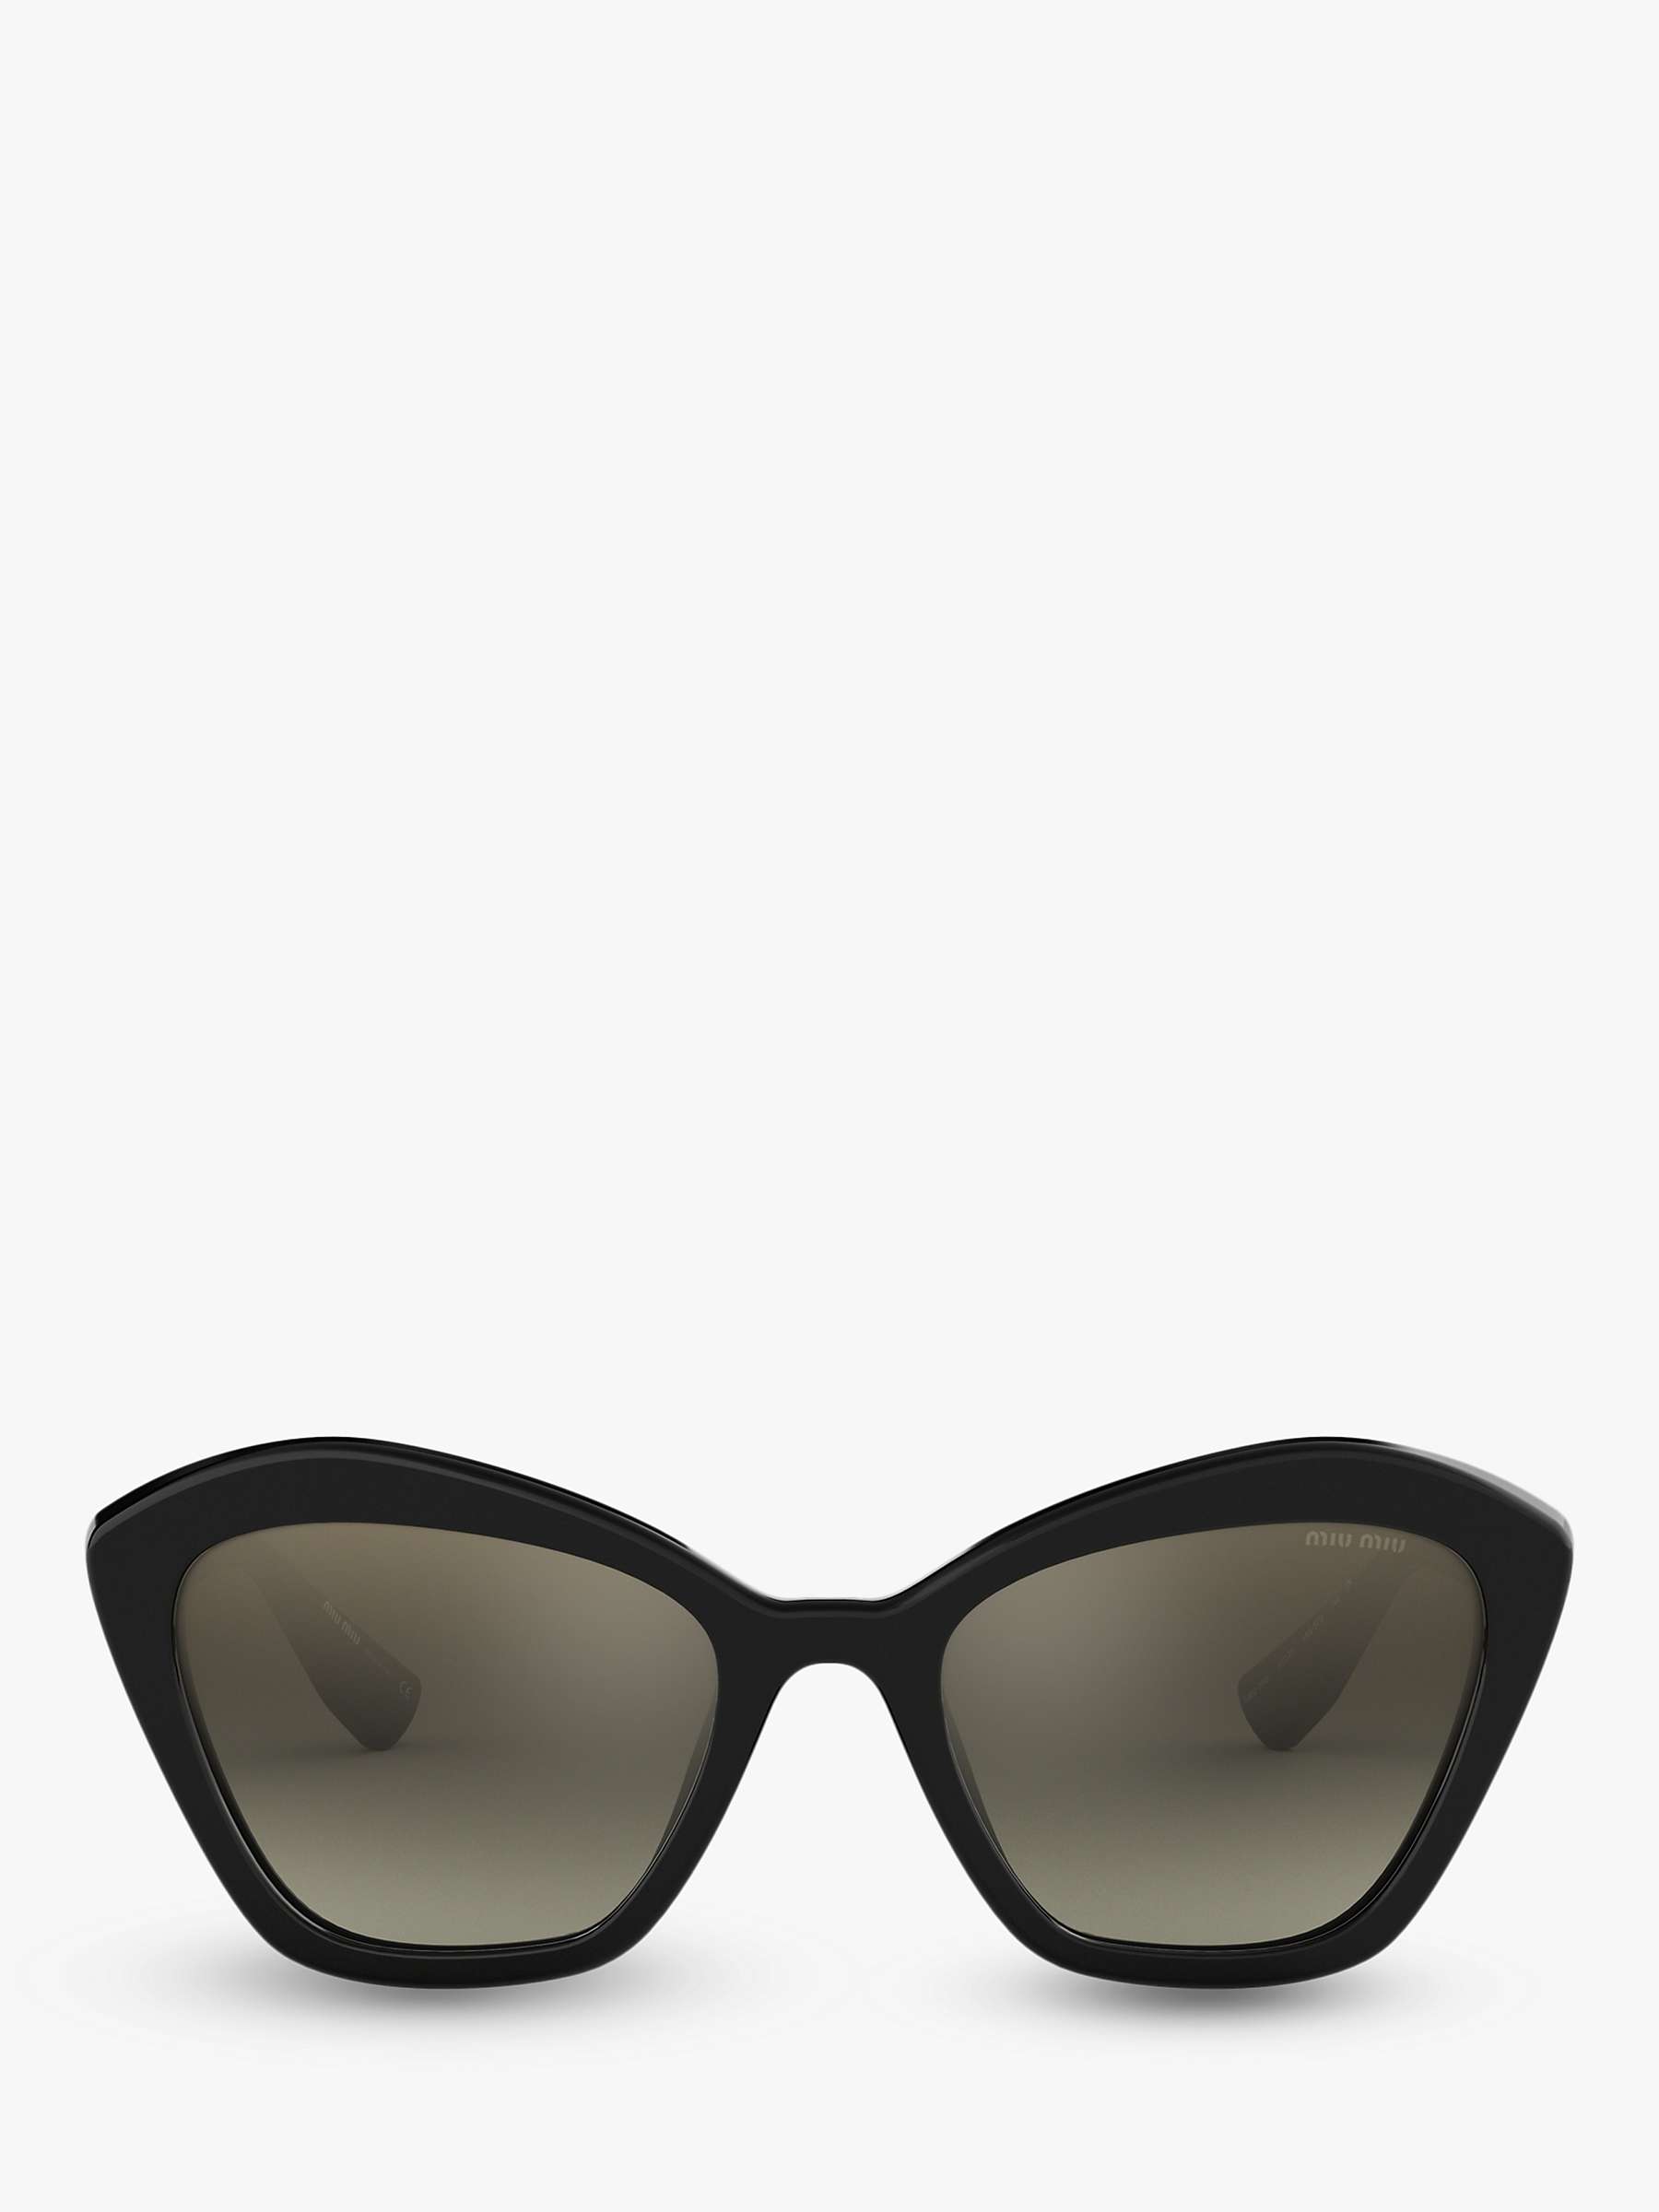 Buy Miu Miu MU 05US Women's Cat's Eye Sunglasses, Black/Mirror Silver Online at johnlewis.com